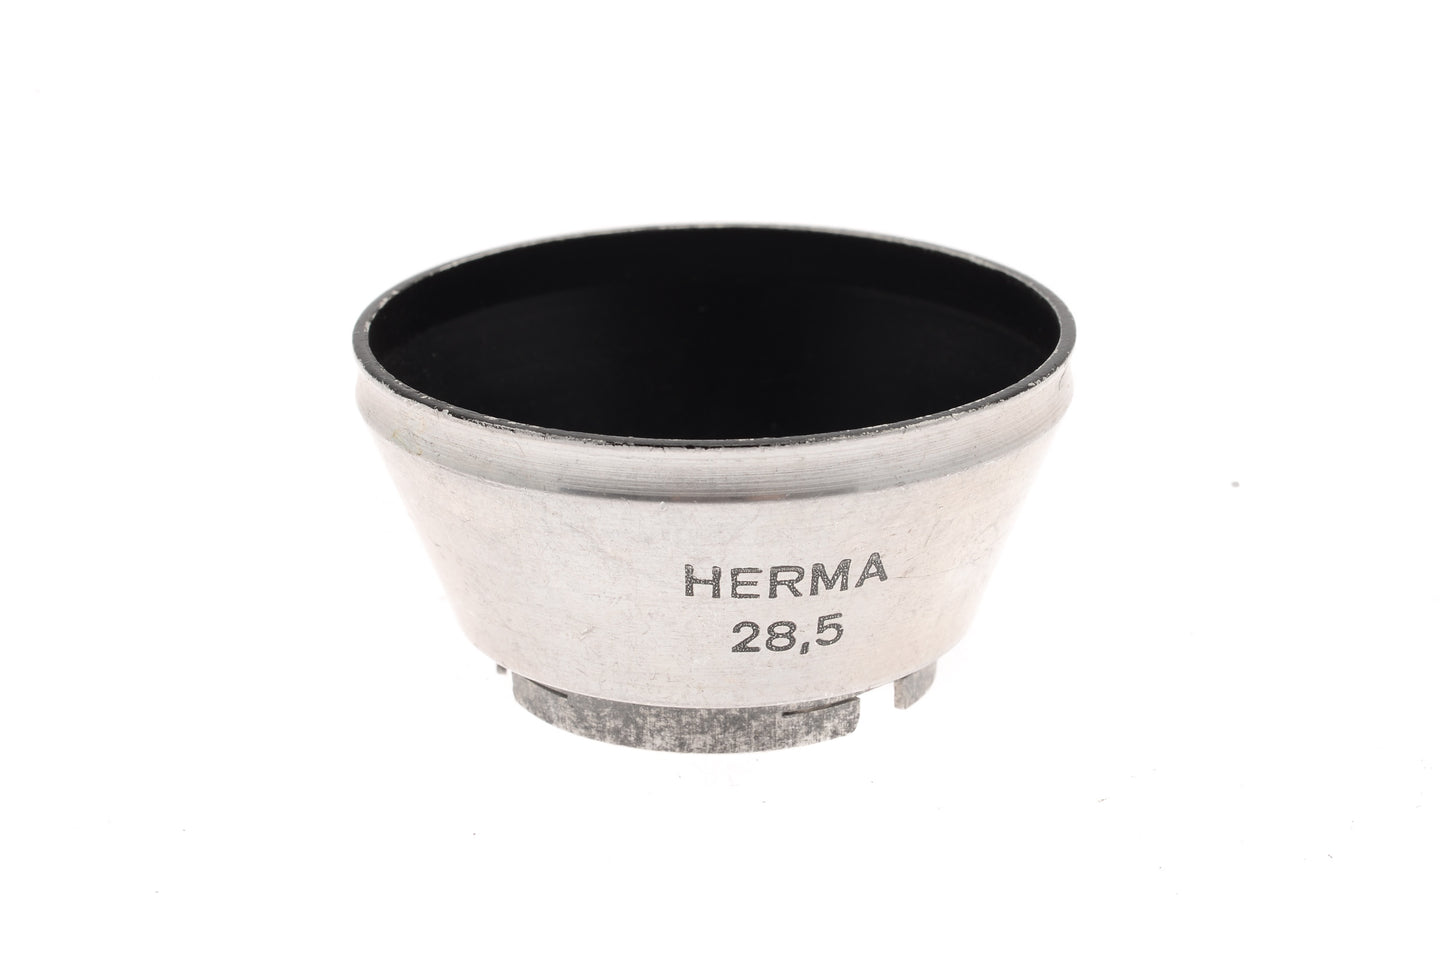 Herma 28.5mm Push-On Lens Hood